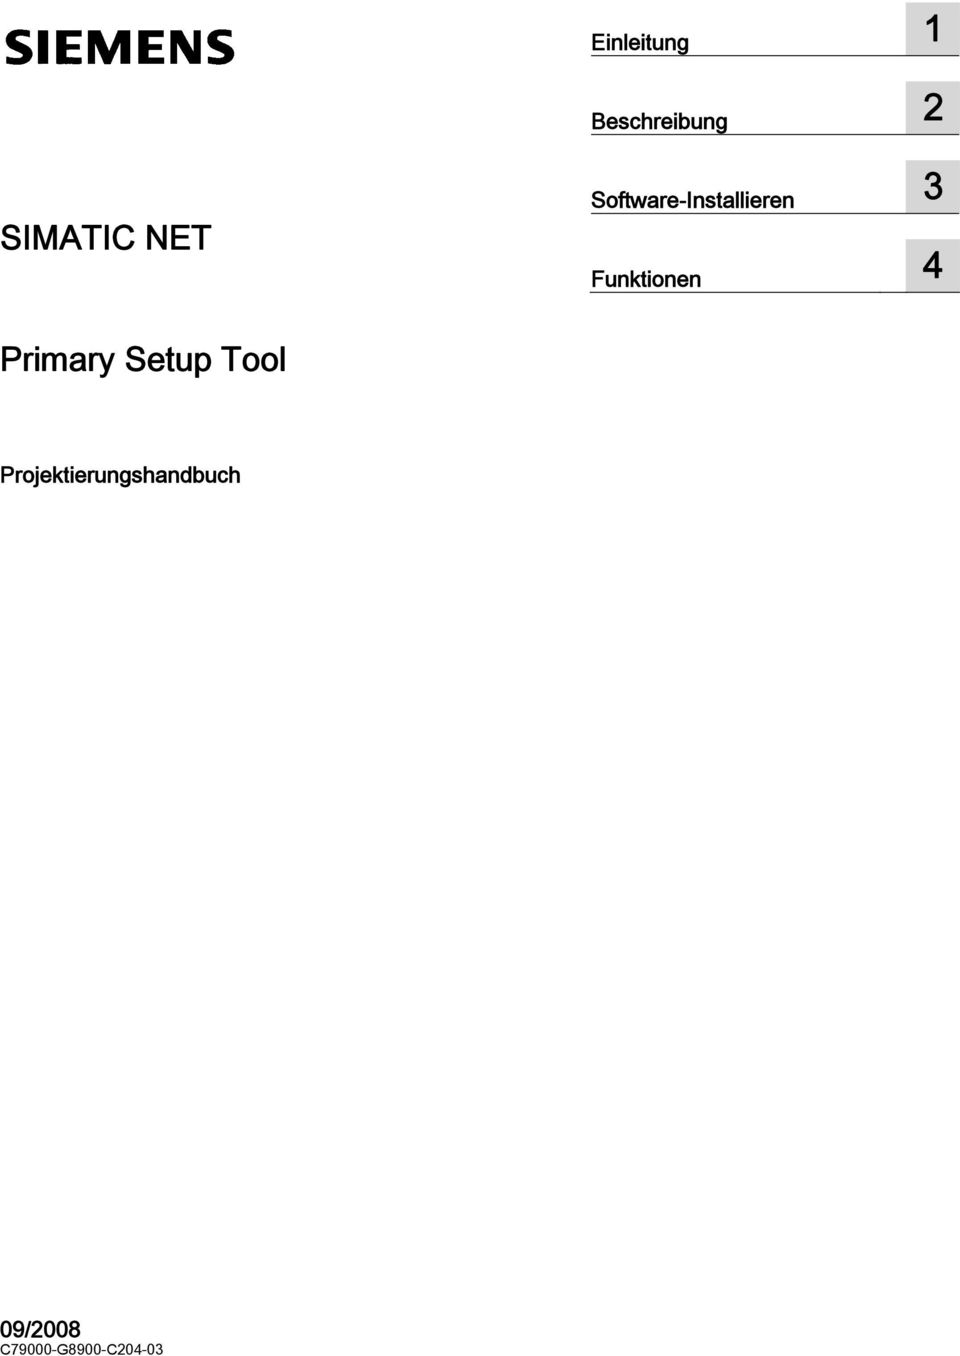 siemens primary setup tool 4.1